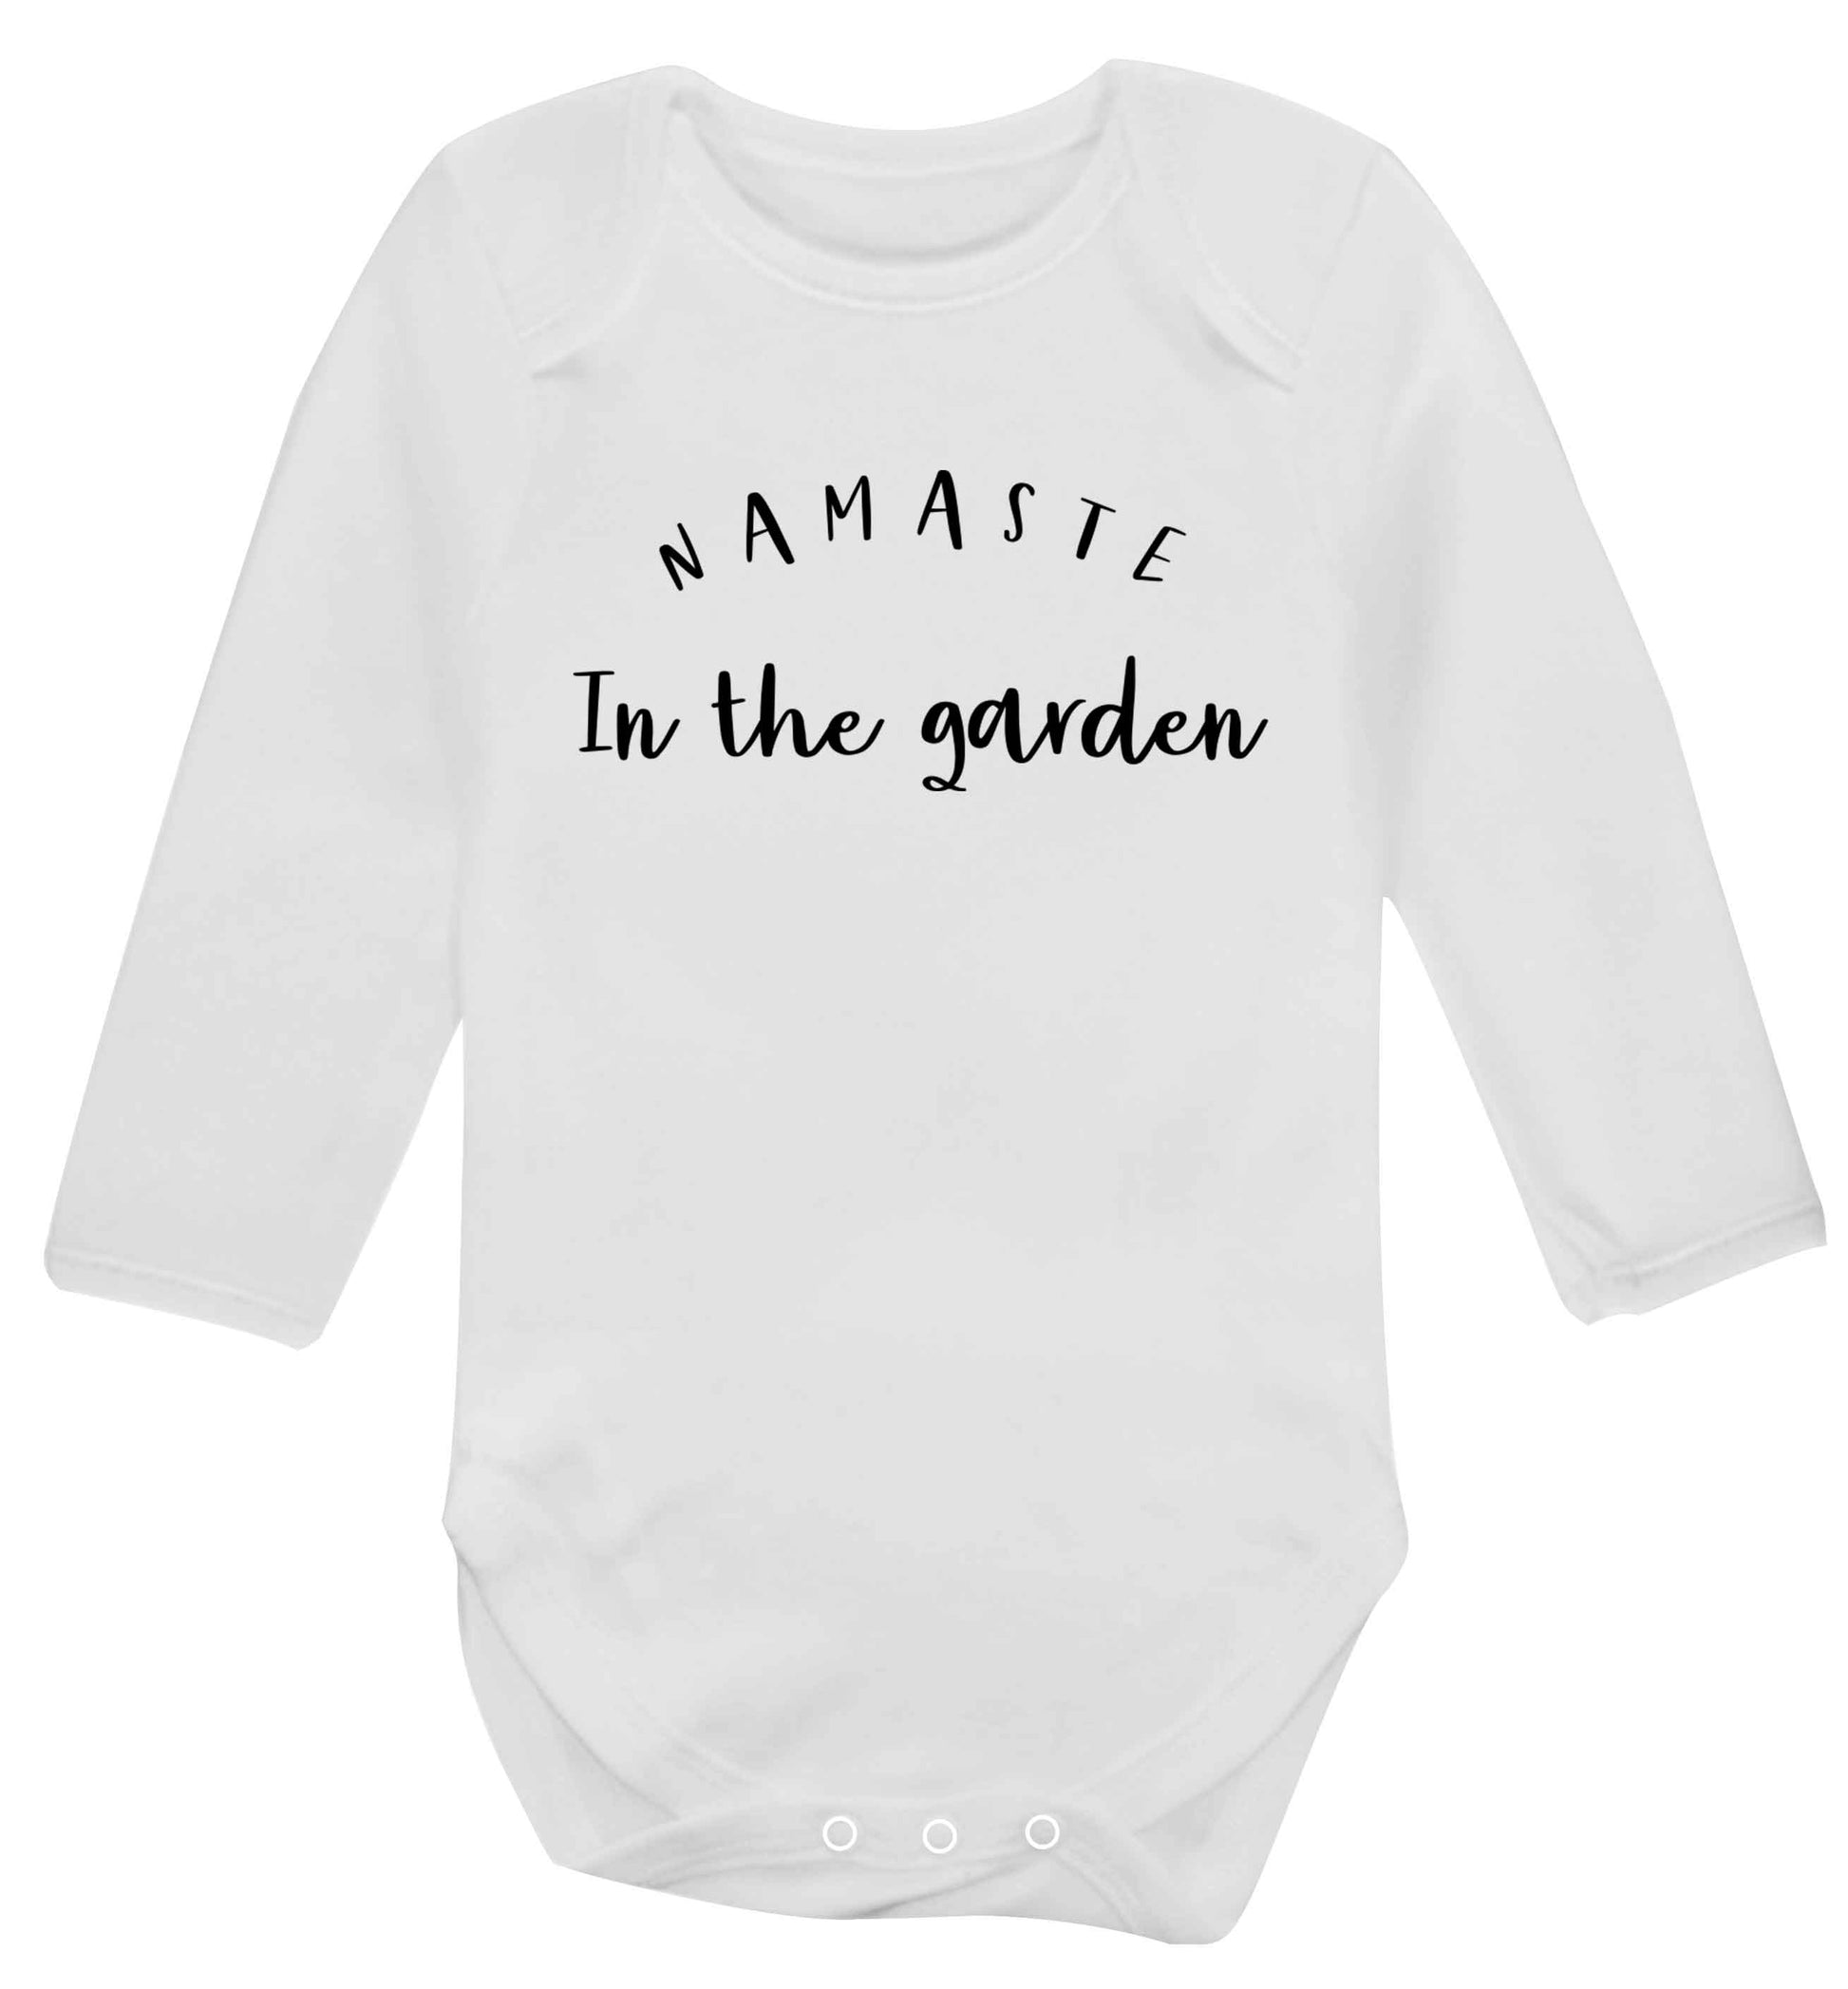 Namaste in the garden Baby Vest long sleeved white 6-12 months